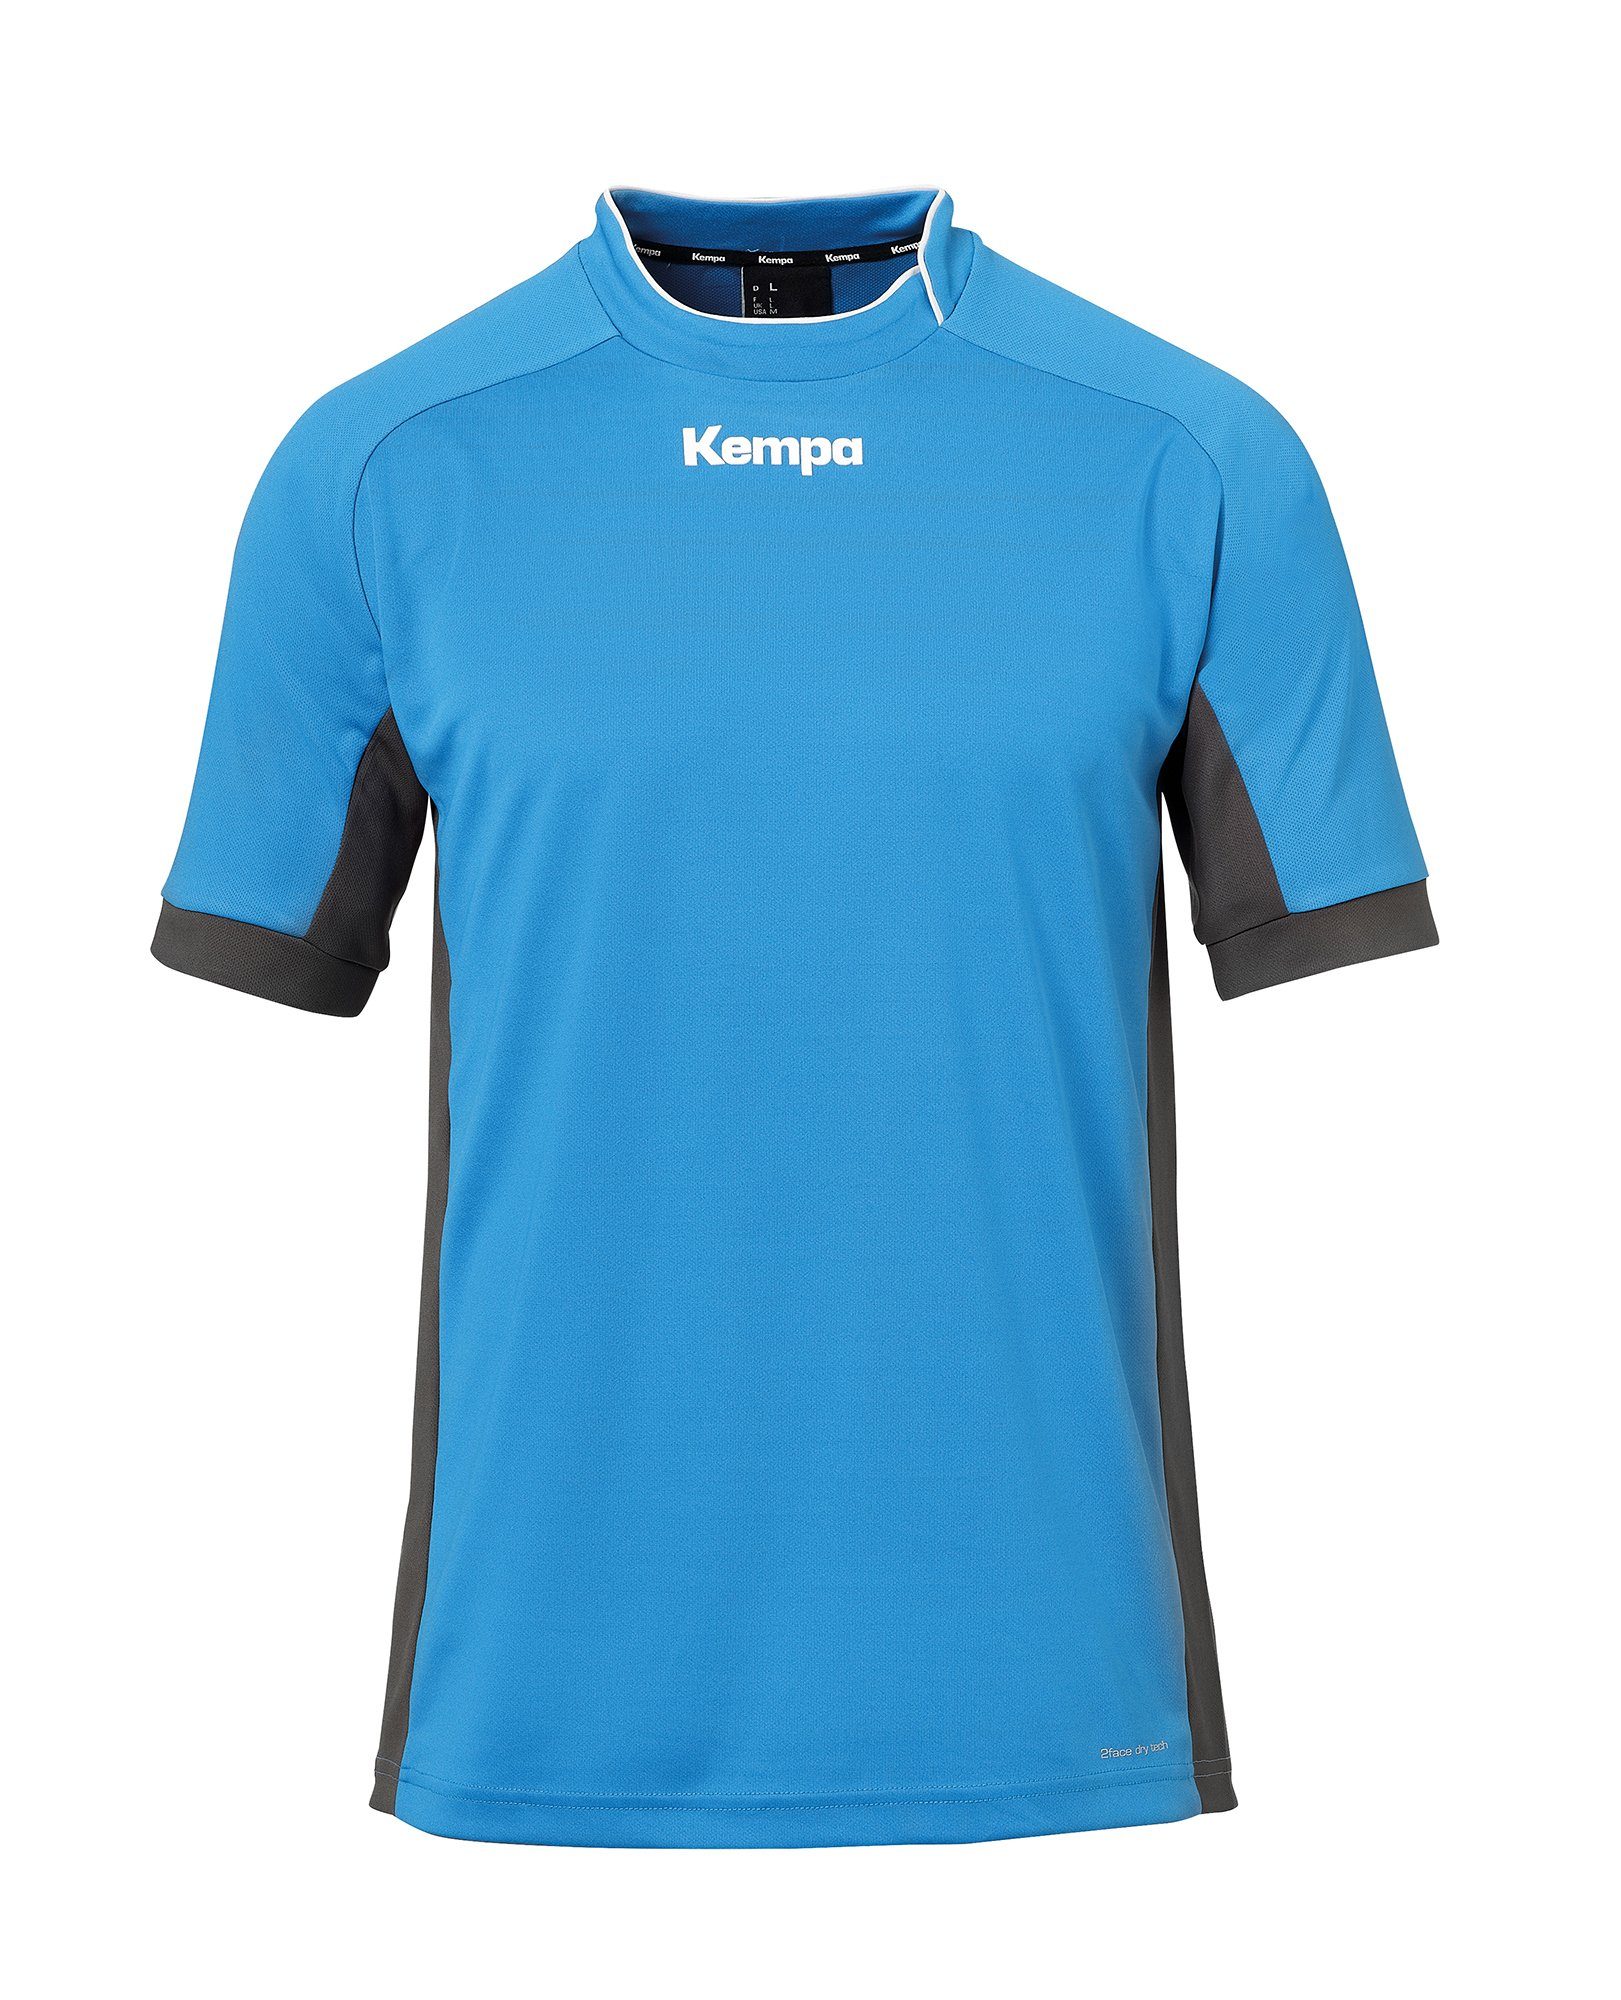 kempablau/anthra TRIKOT Kempa Kempa schnelltrocknend Shirt Trainingsshirt PRIME